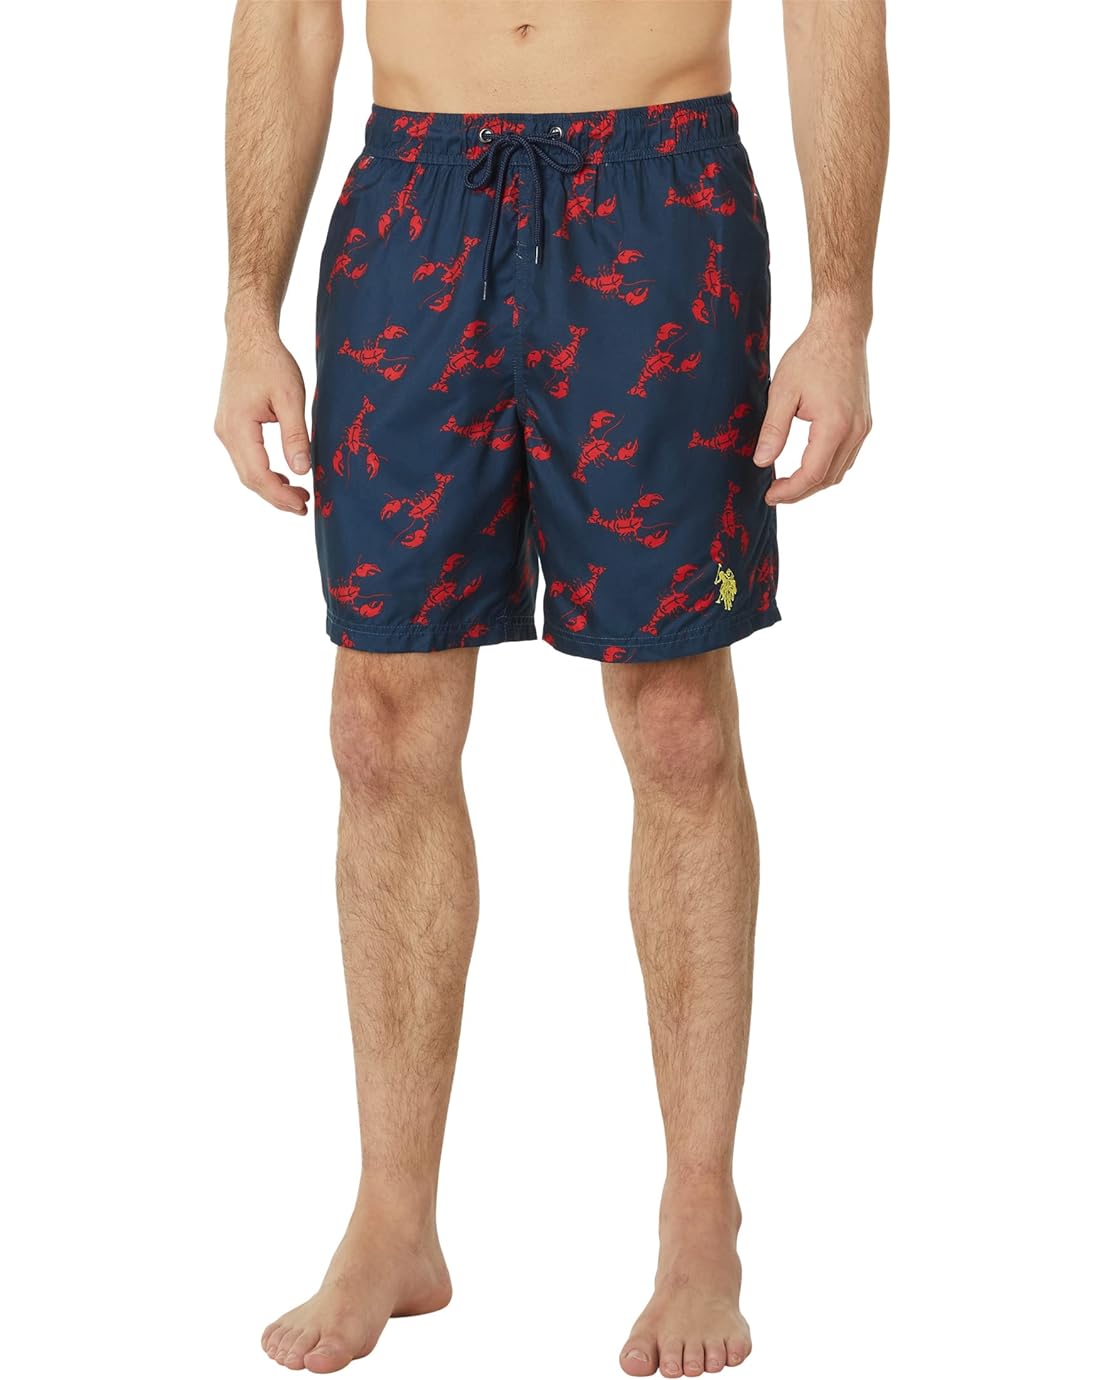 U.S. POLO ASSN. Rock Lobster Swim Shorts